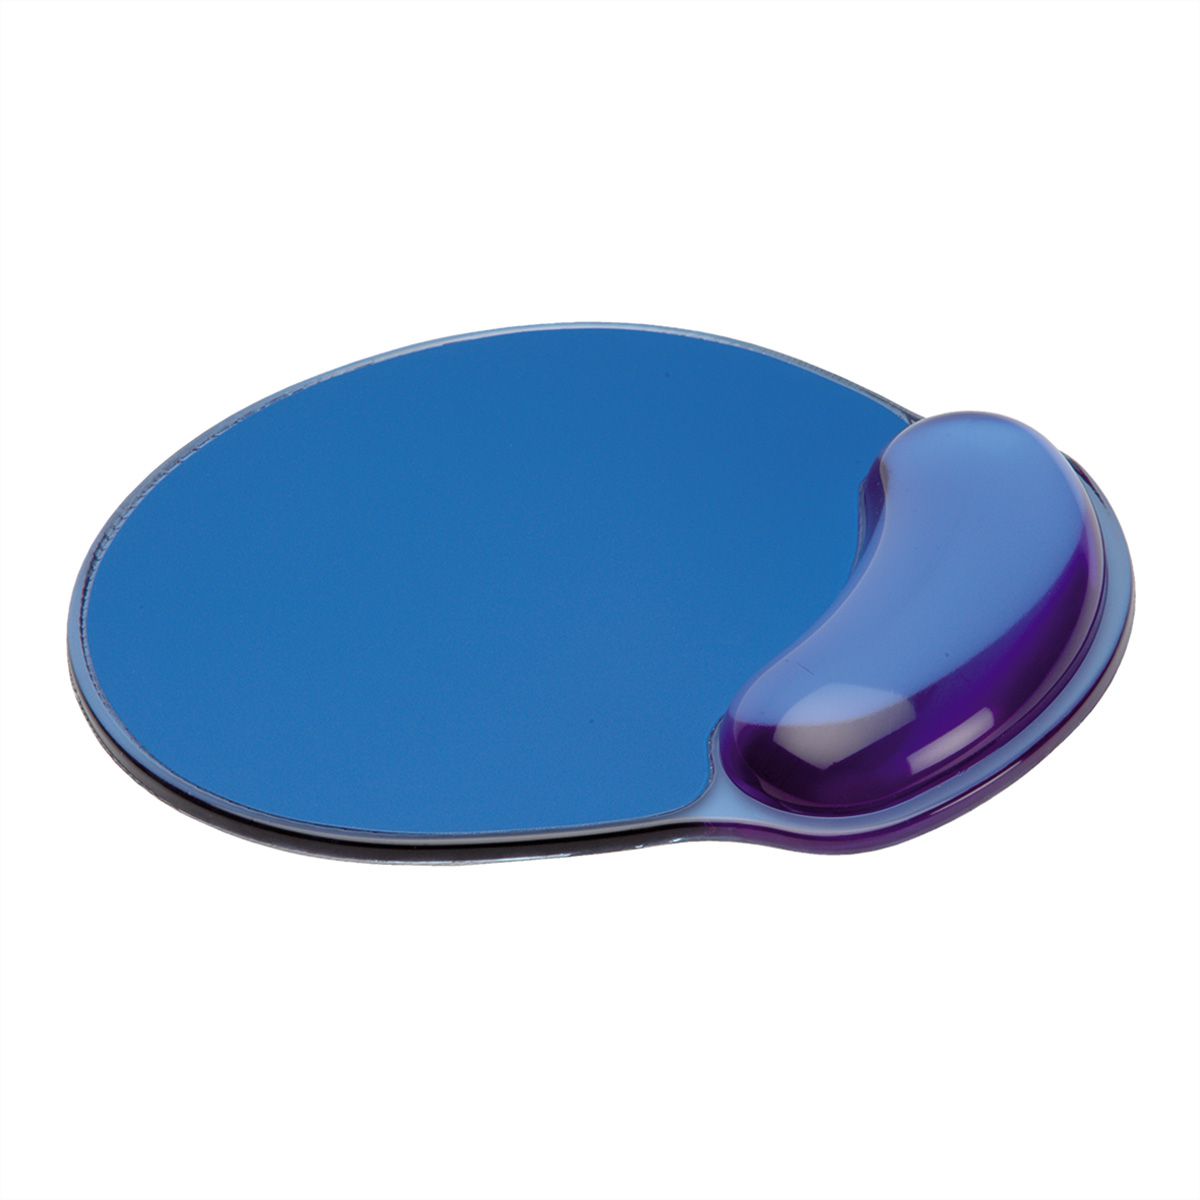 Mousepad with Wristrest, blue - SECOMP International AG